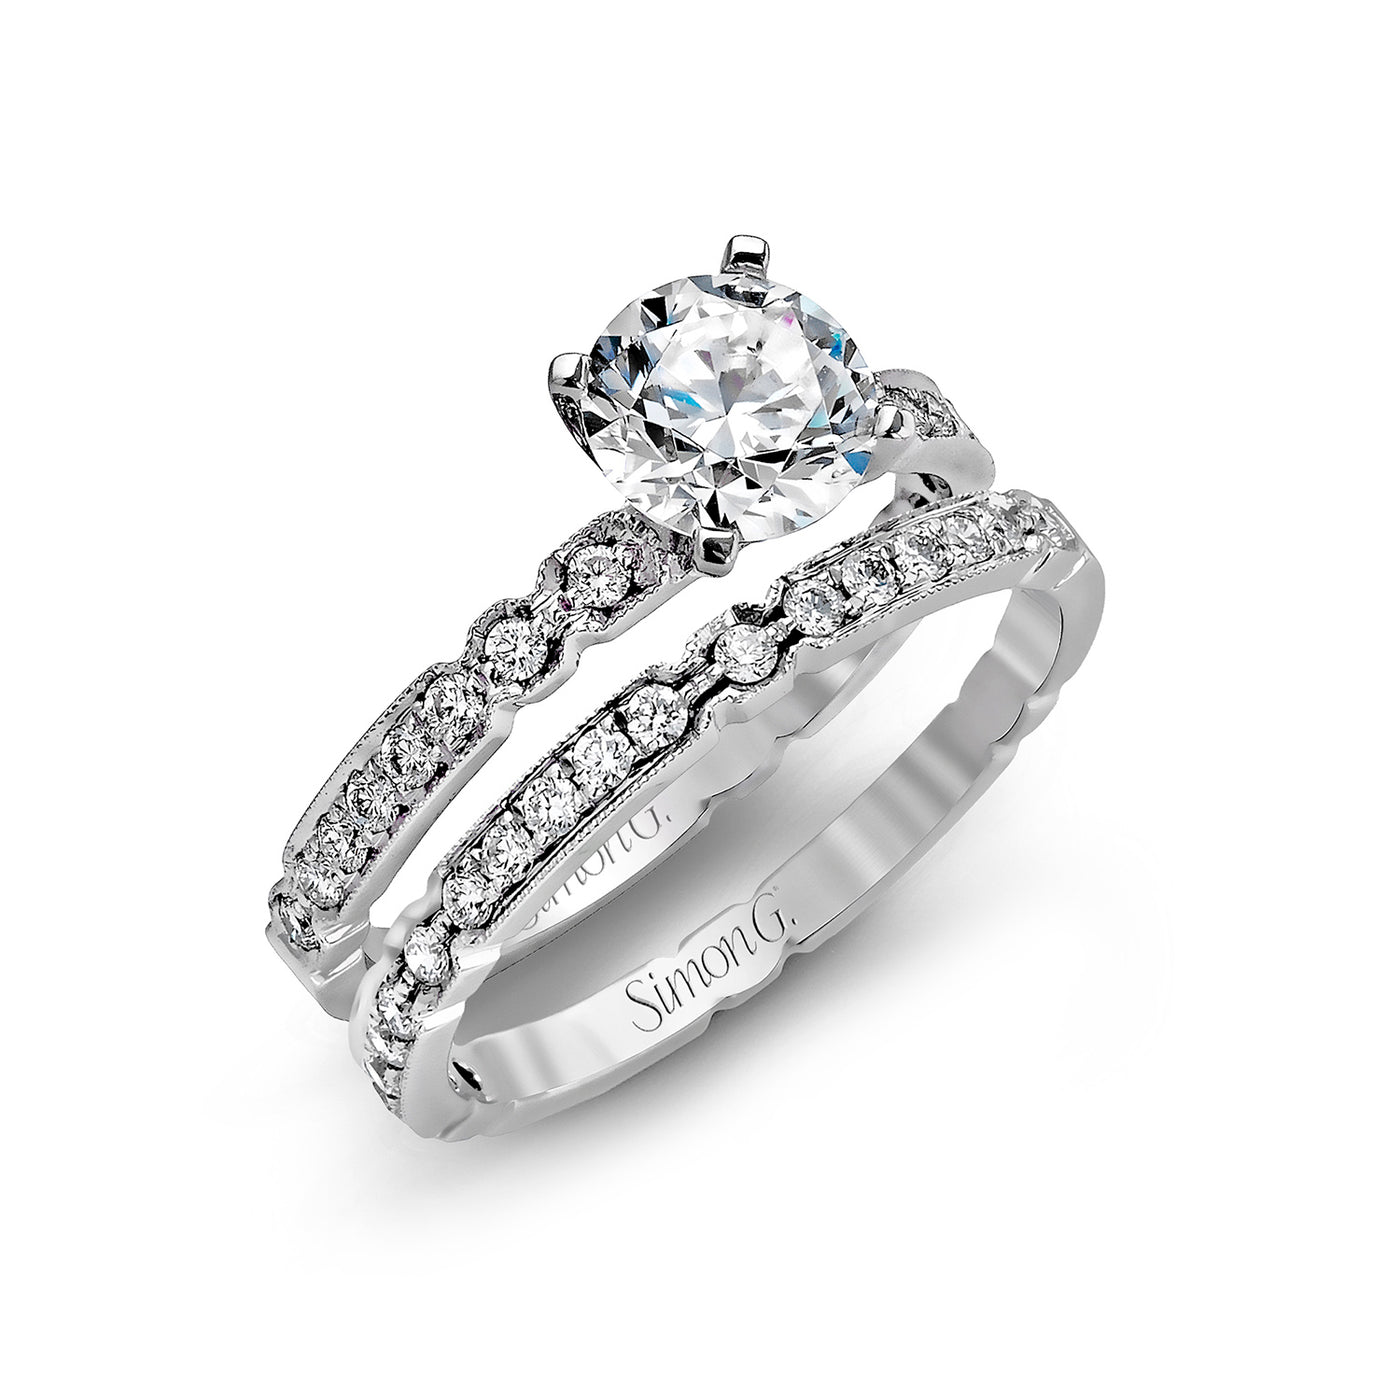 Simon G 18k White Gold Round Solitaire Diamond and Diamonds Semi-Mount Engagement Ring – NR130